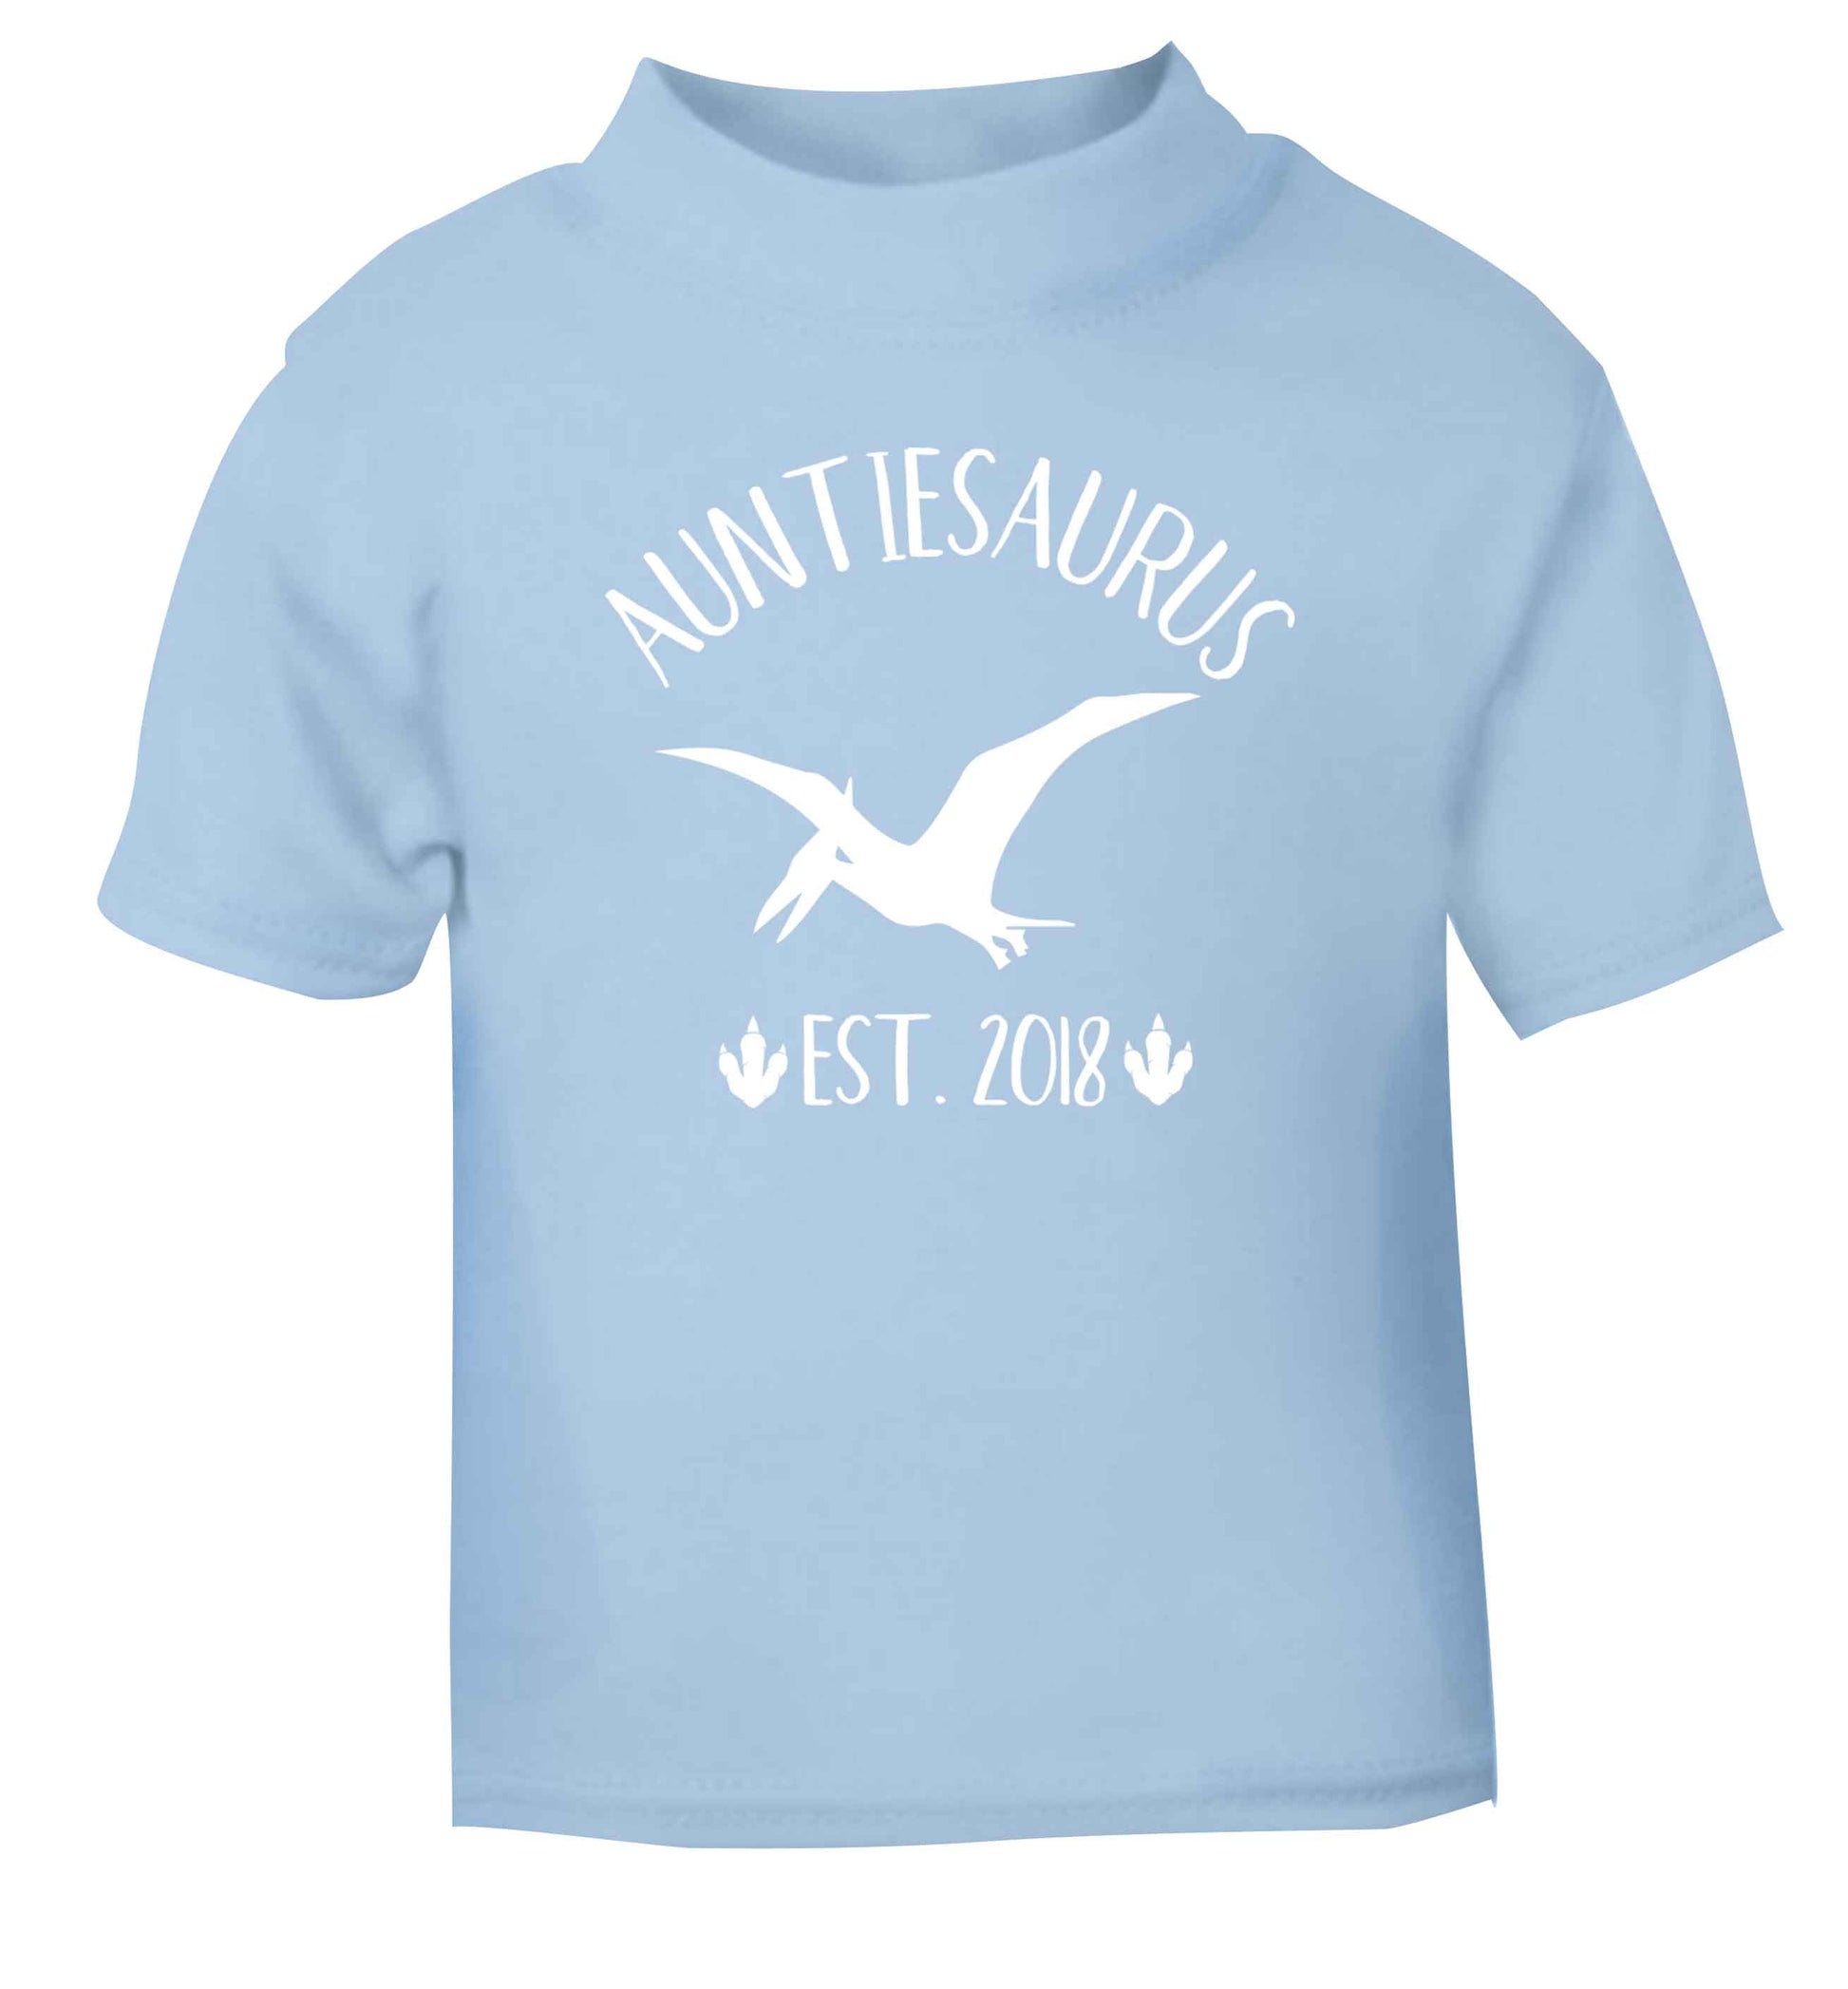 Personalised auntiesaurus since (custom date) light blue Baby Toddler Tshirt 2 Years